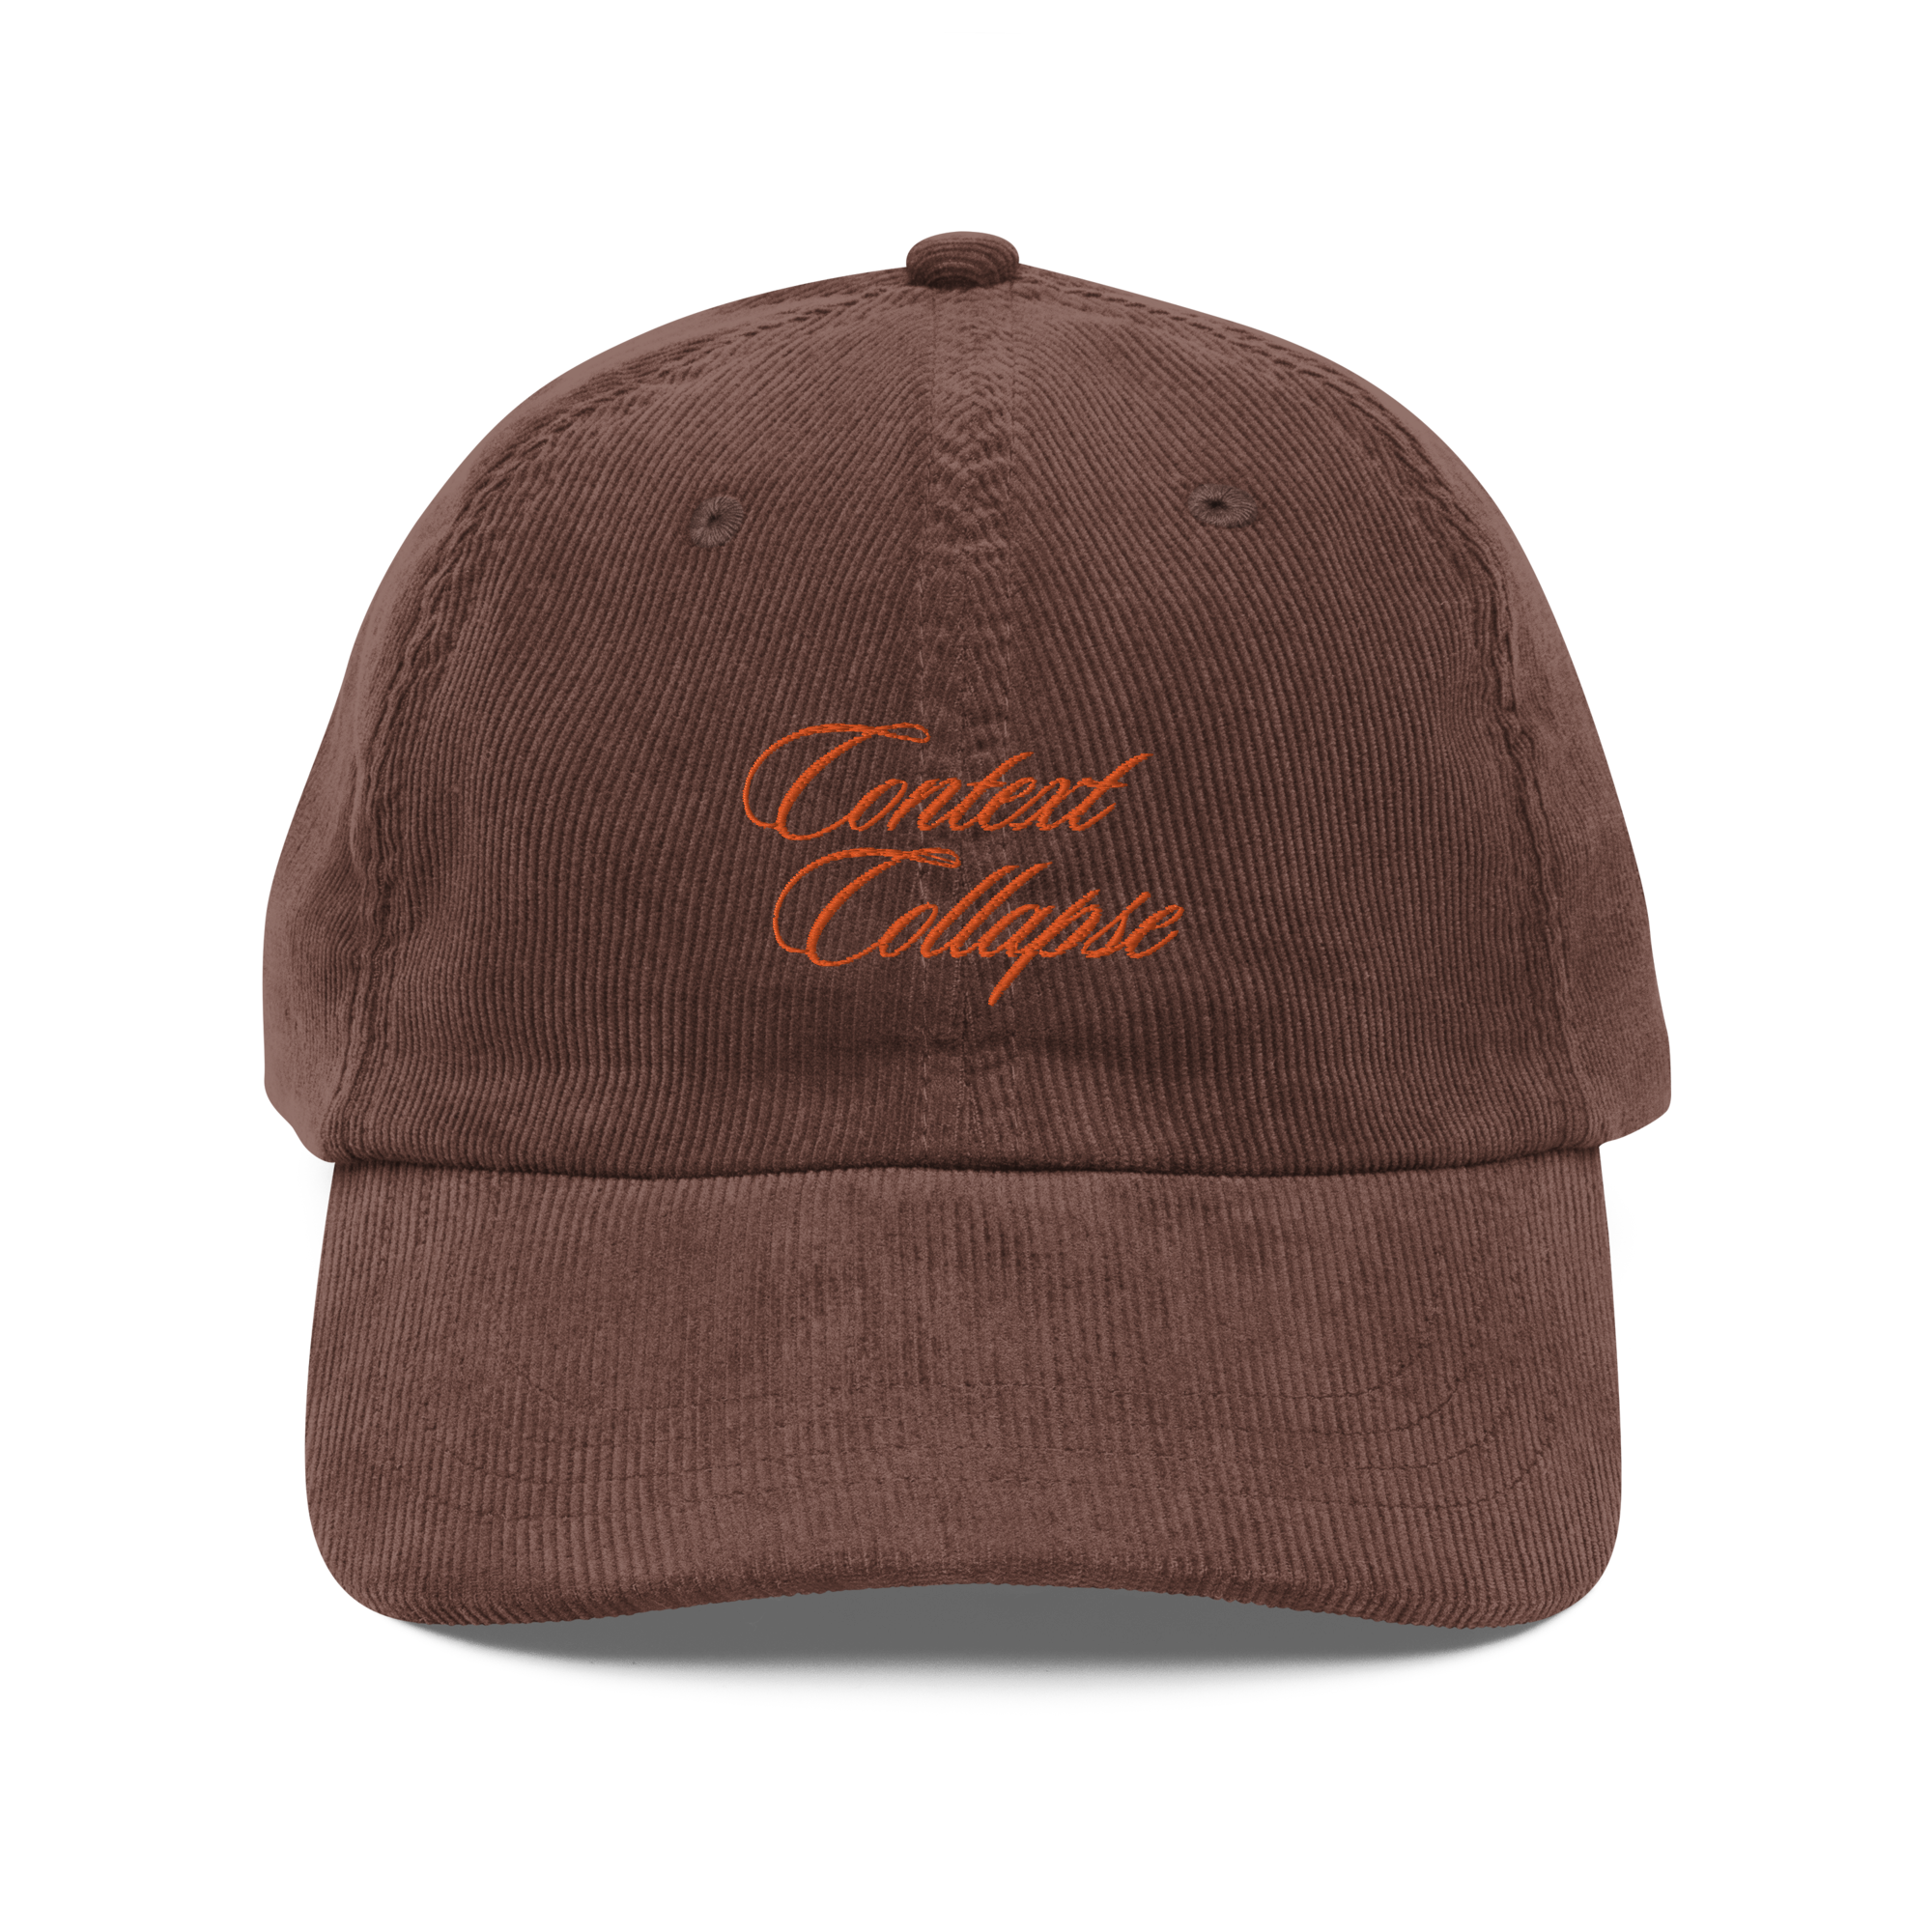 Context Collapse - Corduroy Hat